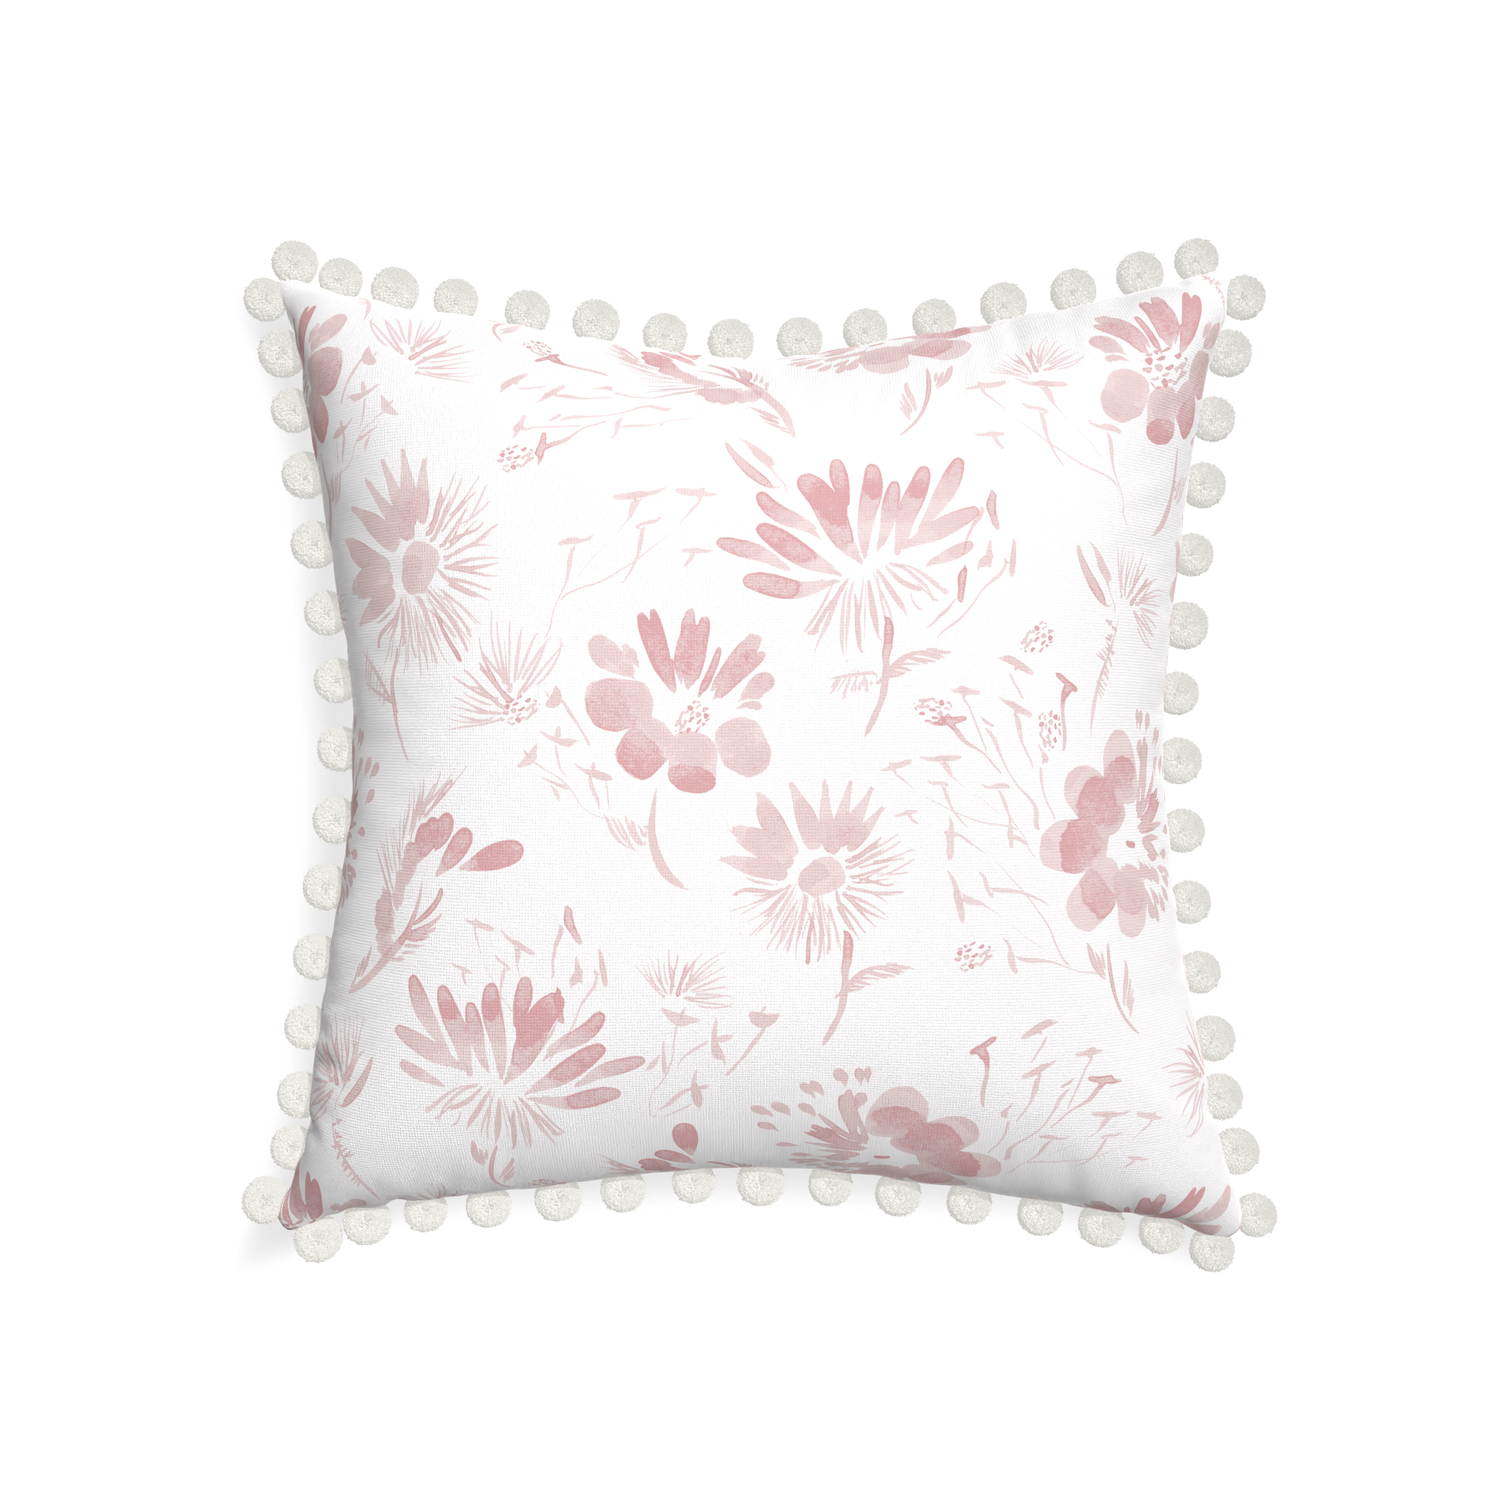 22-square blake custom pink floralpillow with snow pom pom on white background